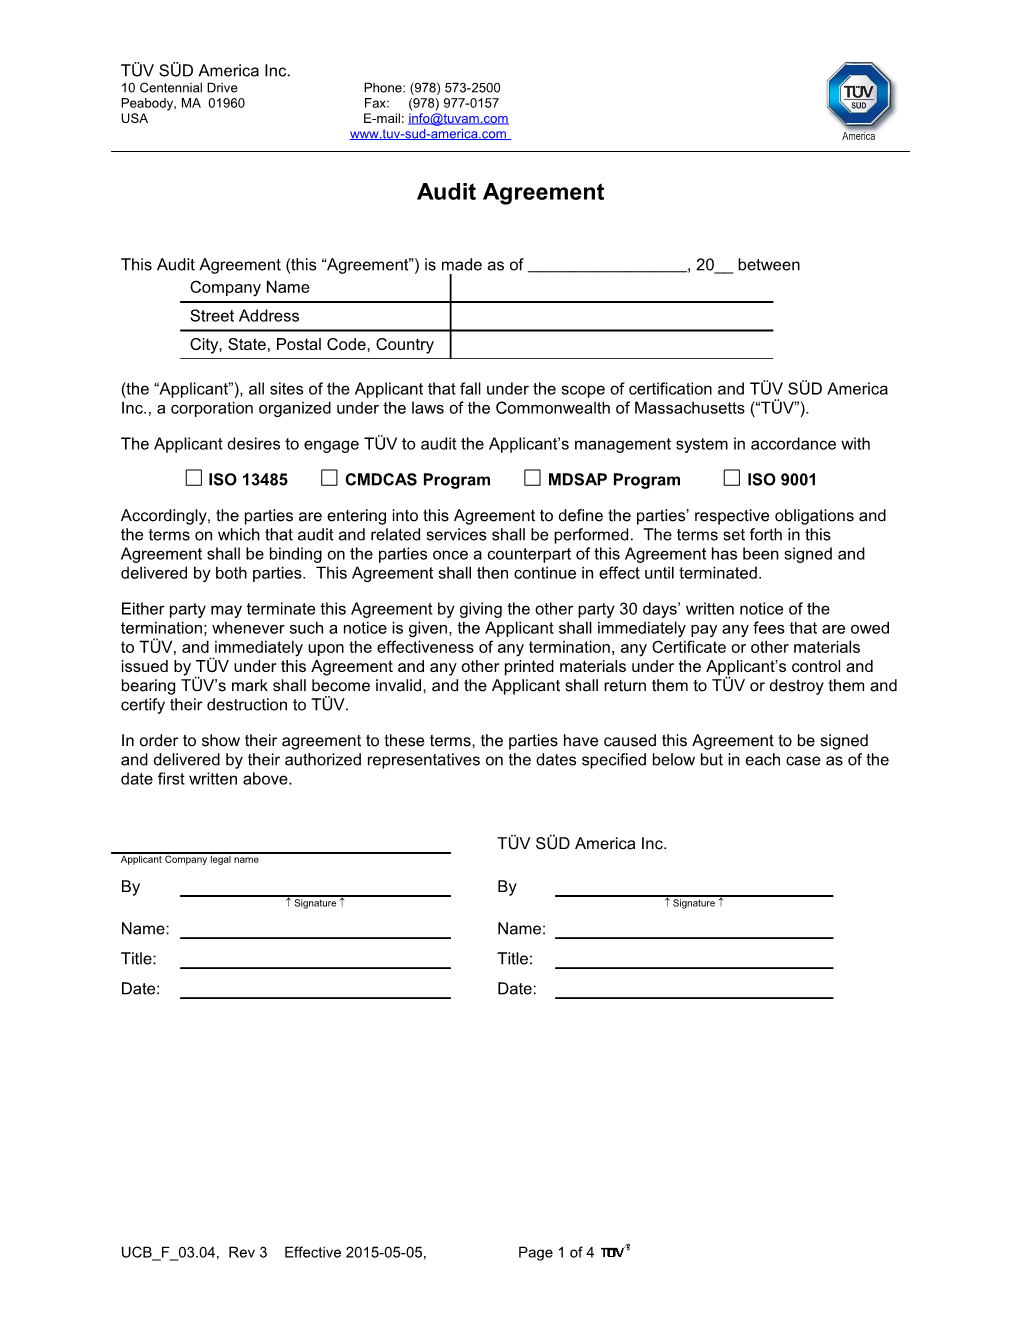 MHS Audit Agreement